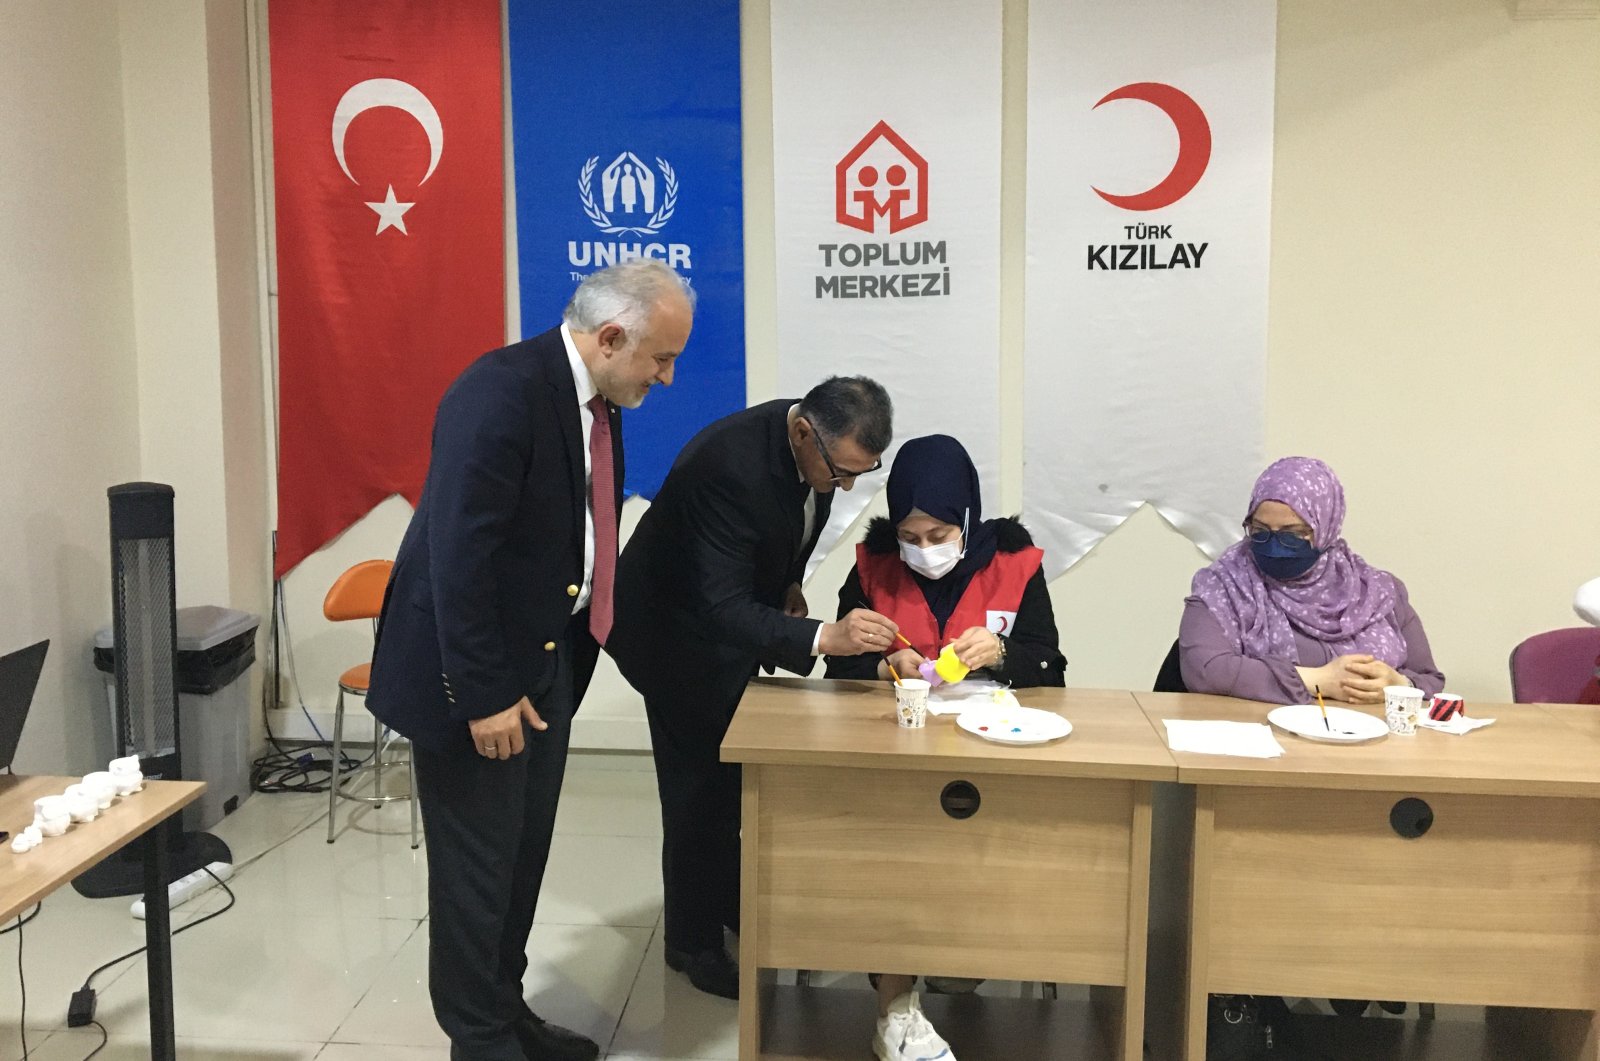 President of the Turkish Red Crescent Kerem Kınık (L), his Azerbaijani counterpart Novruzali Aslanov (2L) and other officials sign the cooperation agreement at the Turkish Red Crescent's Community Center in Bağcılar, Istanbul, Turkey, Oct. 14, 2021. (IHA Photo)